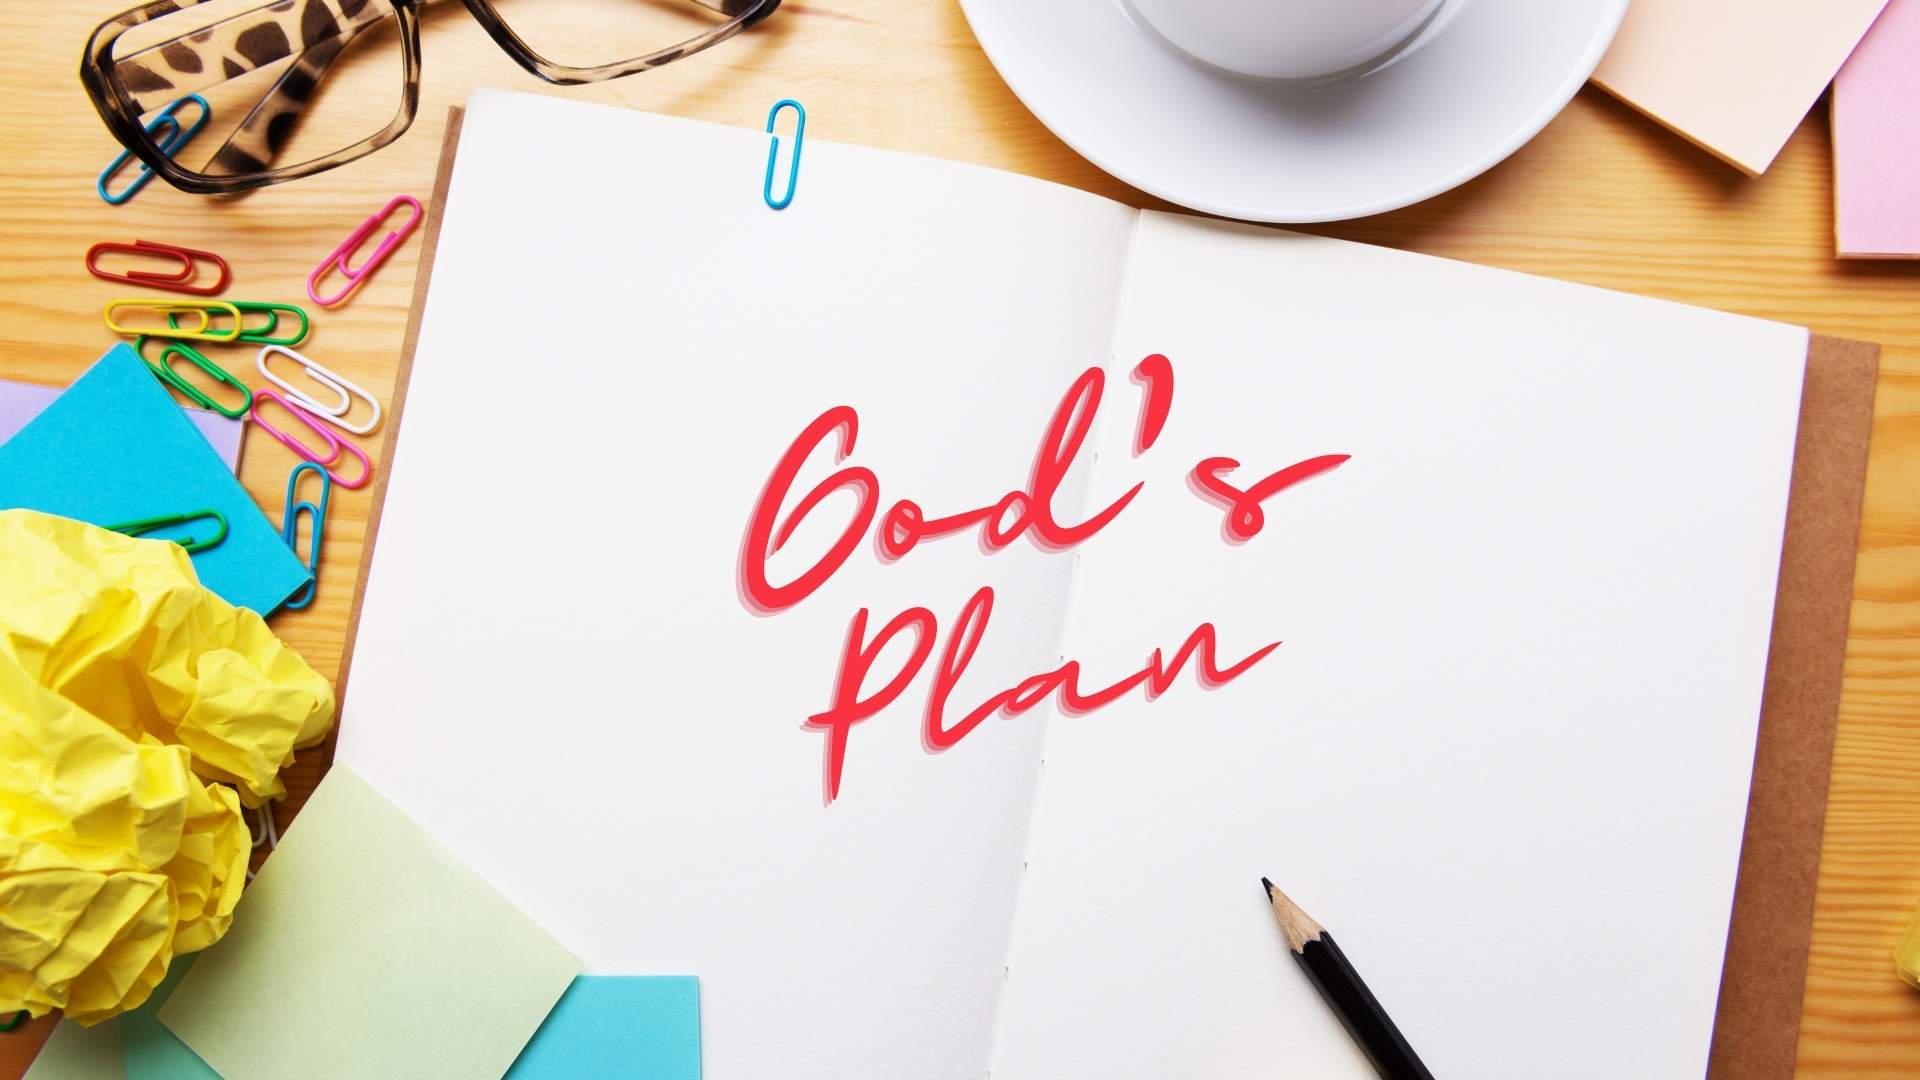 God's plan in planner